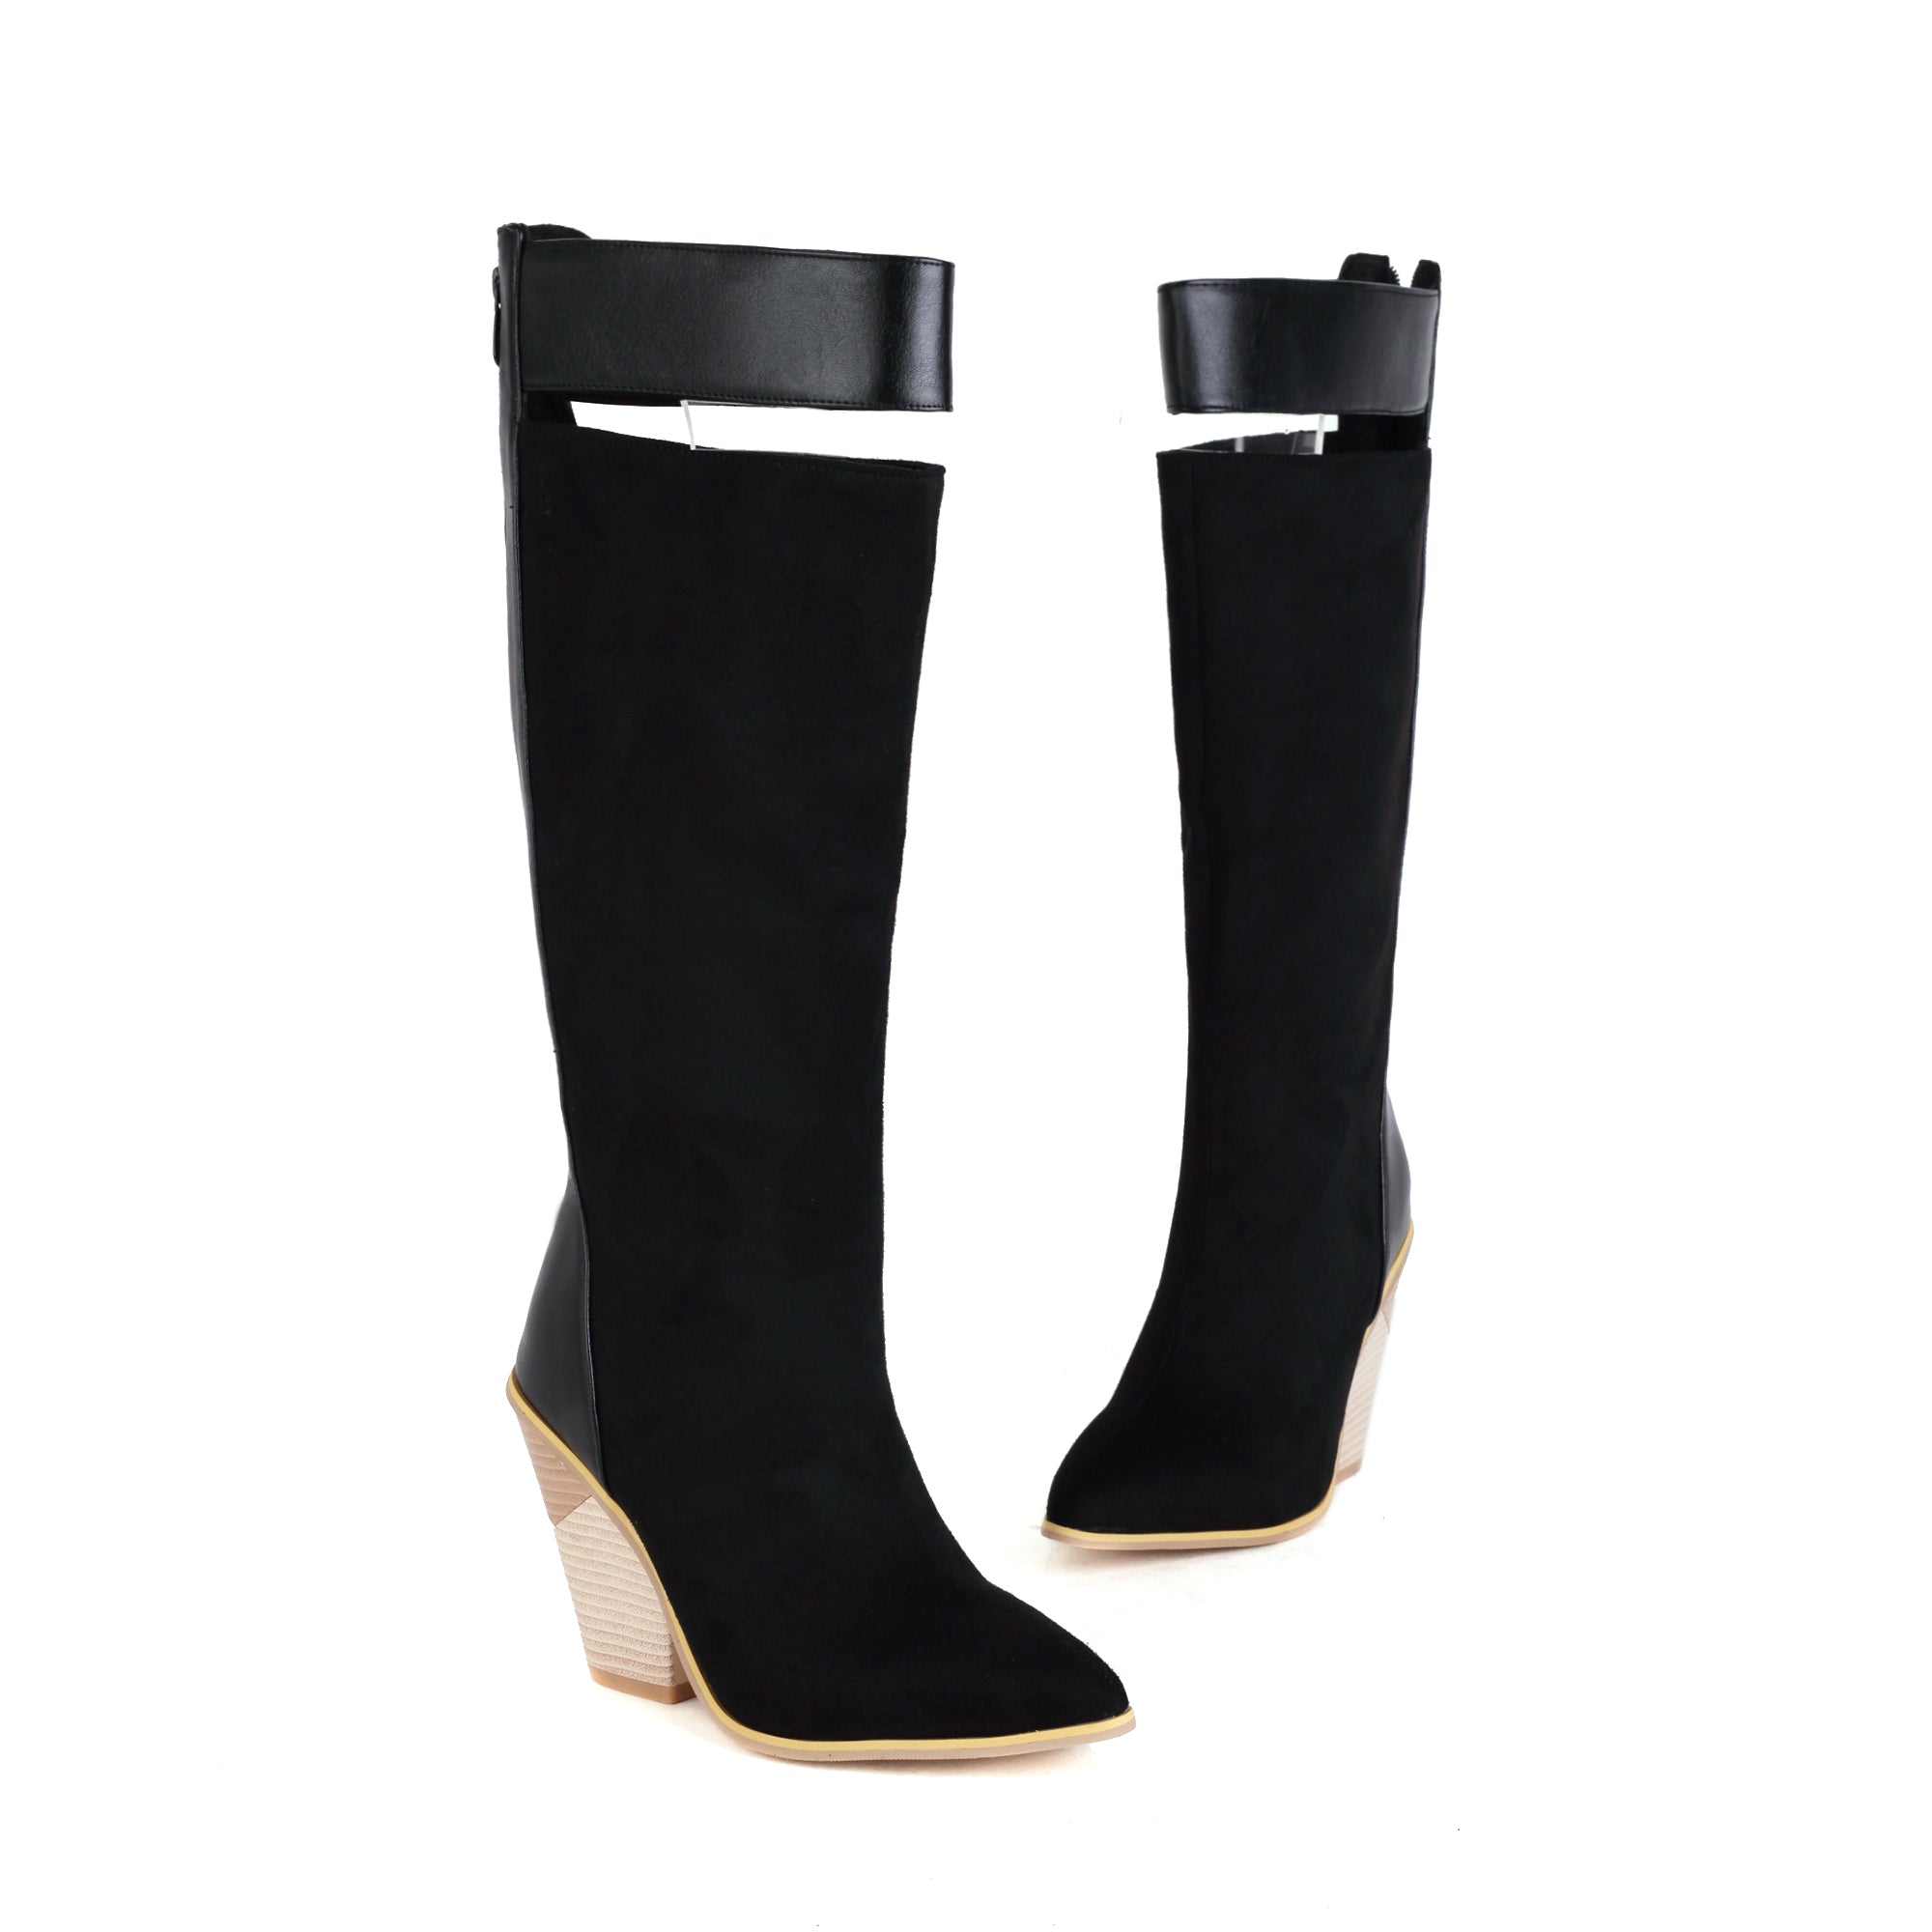 Bigsizeheels American folk wooden heel boots - Black freeshipping - bigsizeheel®-size5-size15 -All Plus Sizes Available!